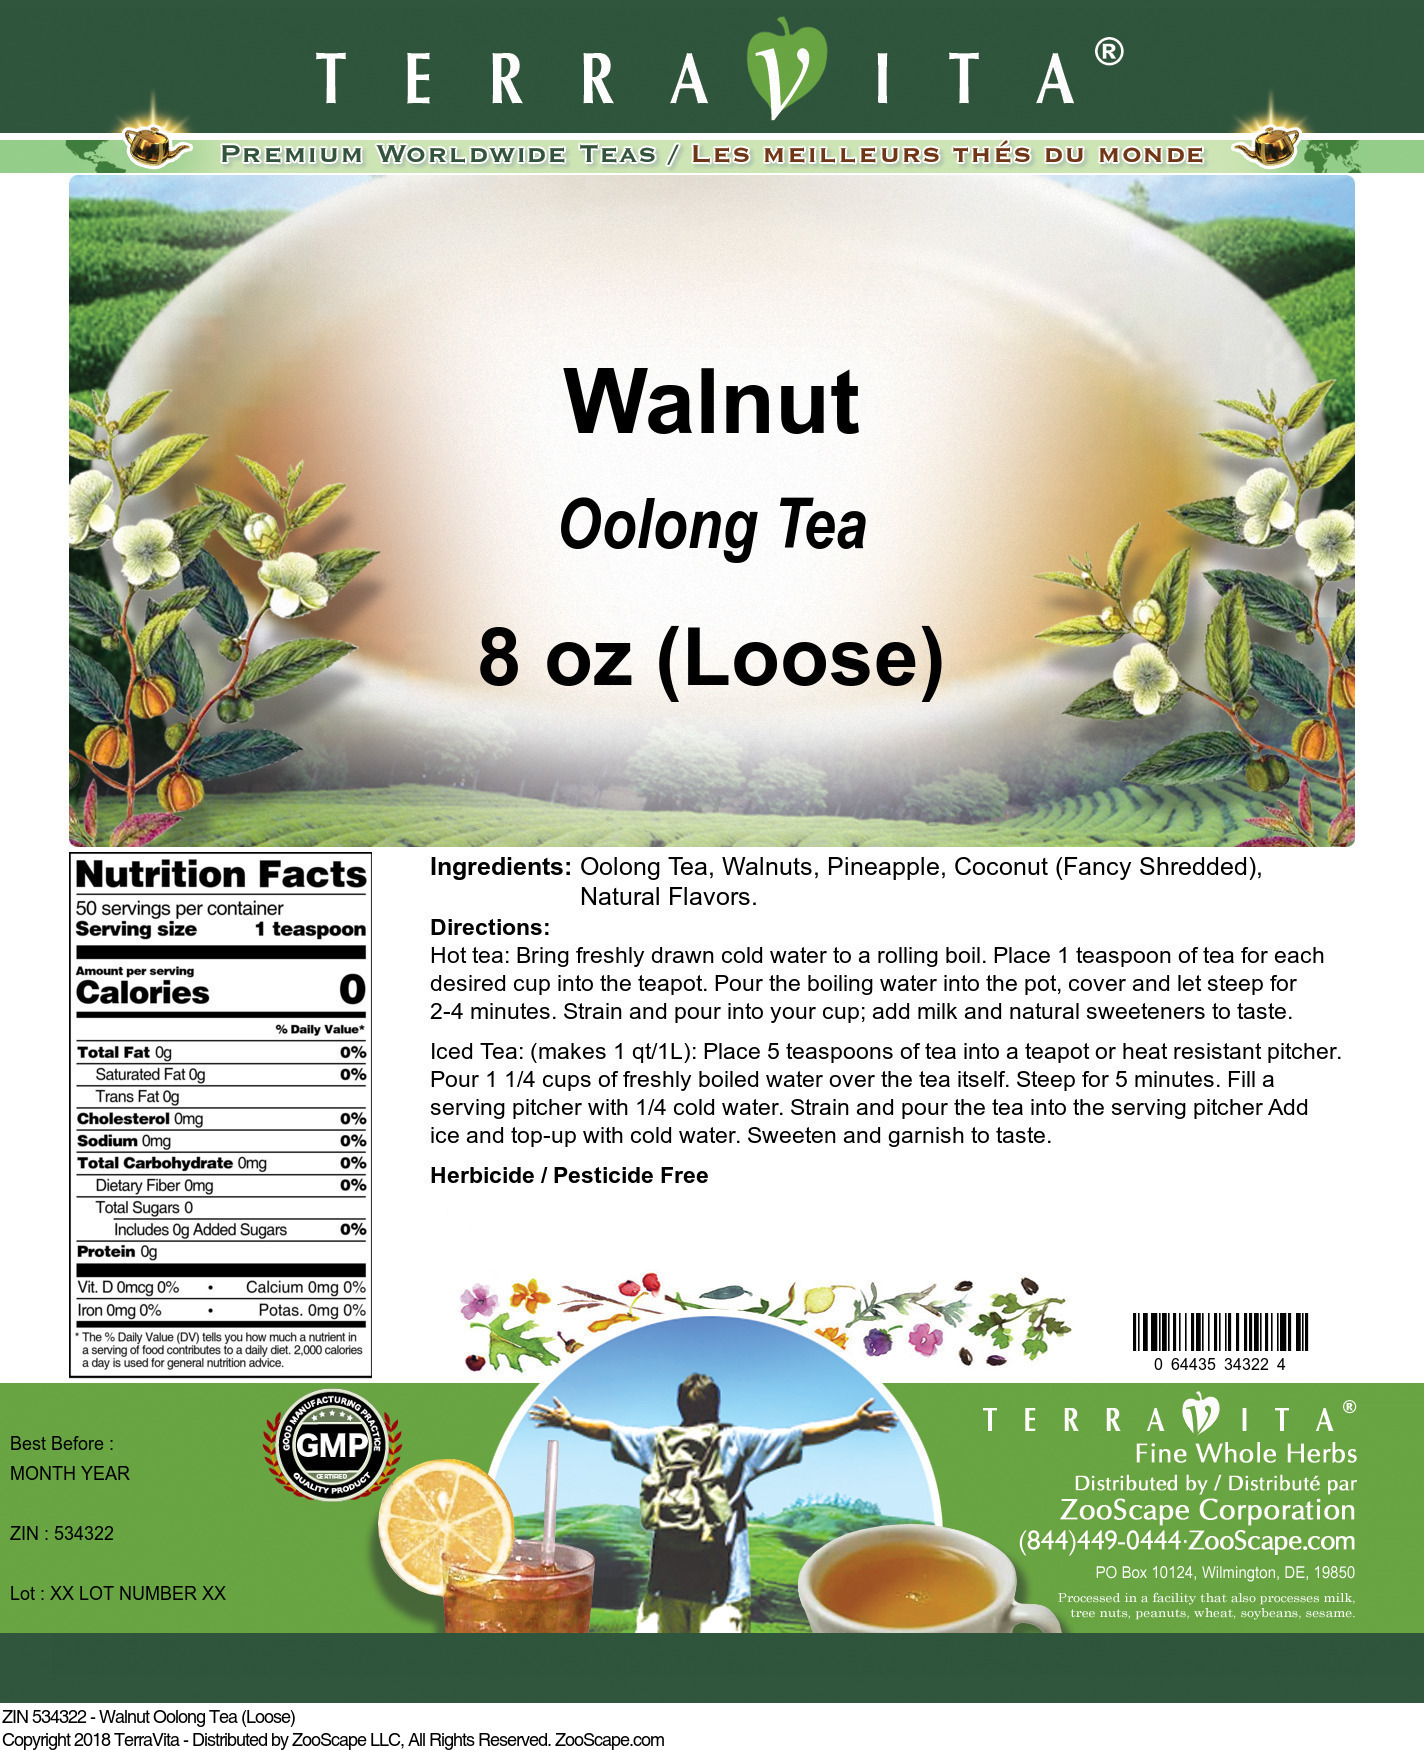 Walnut Oolong Tea (Loose) - Label